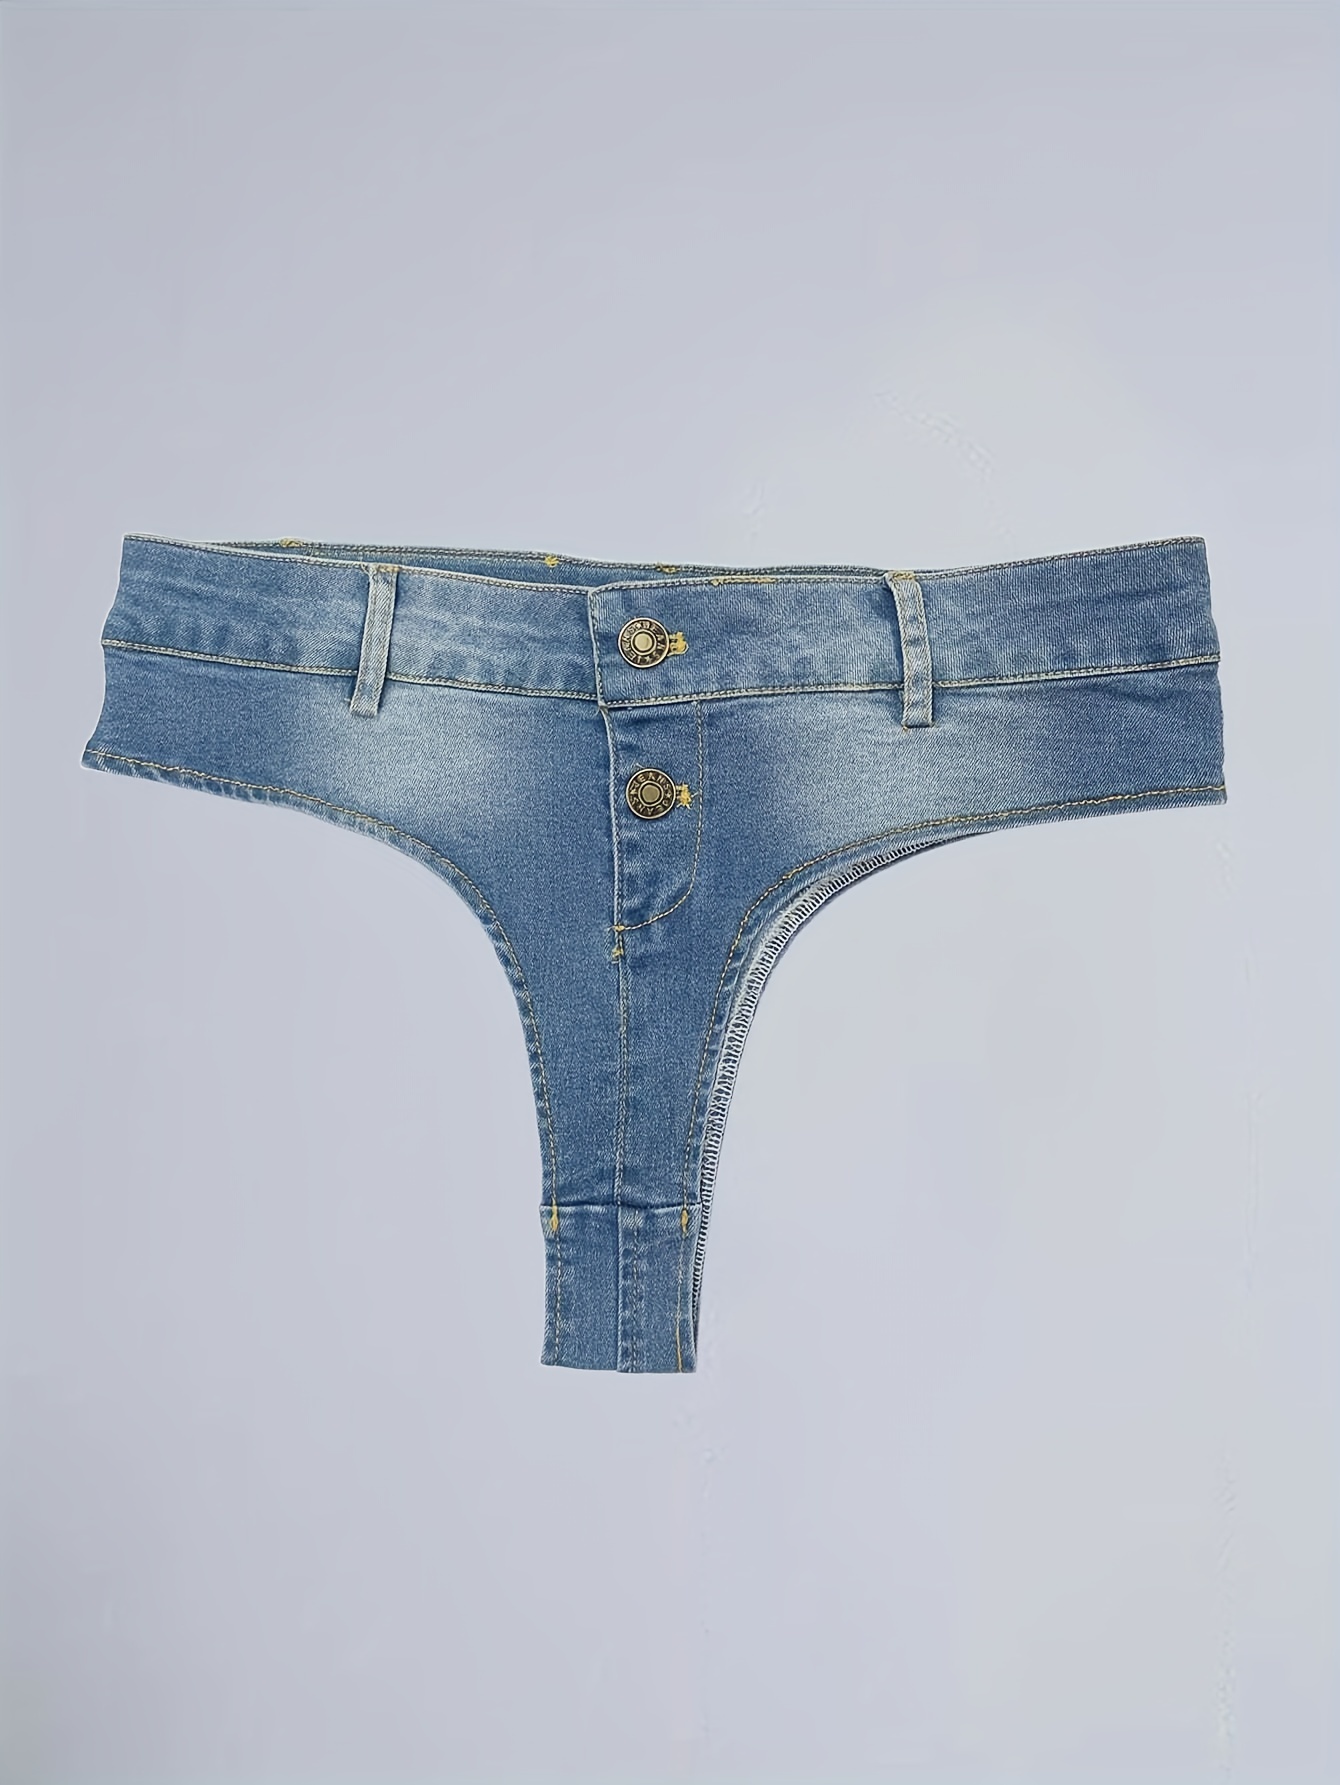 Denim Booty Shorts Women Stretchy Jean Shorts High Rise Sexy